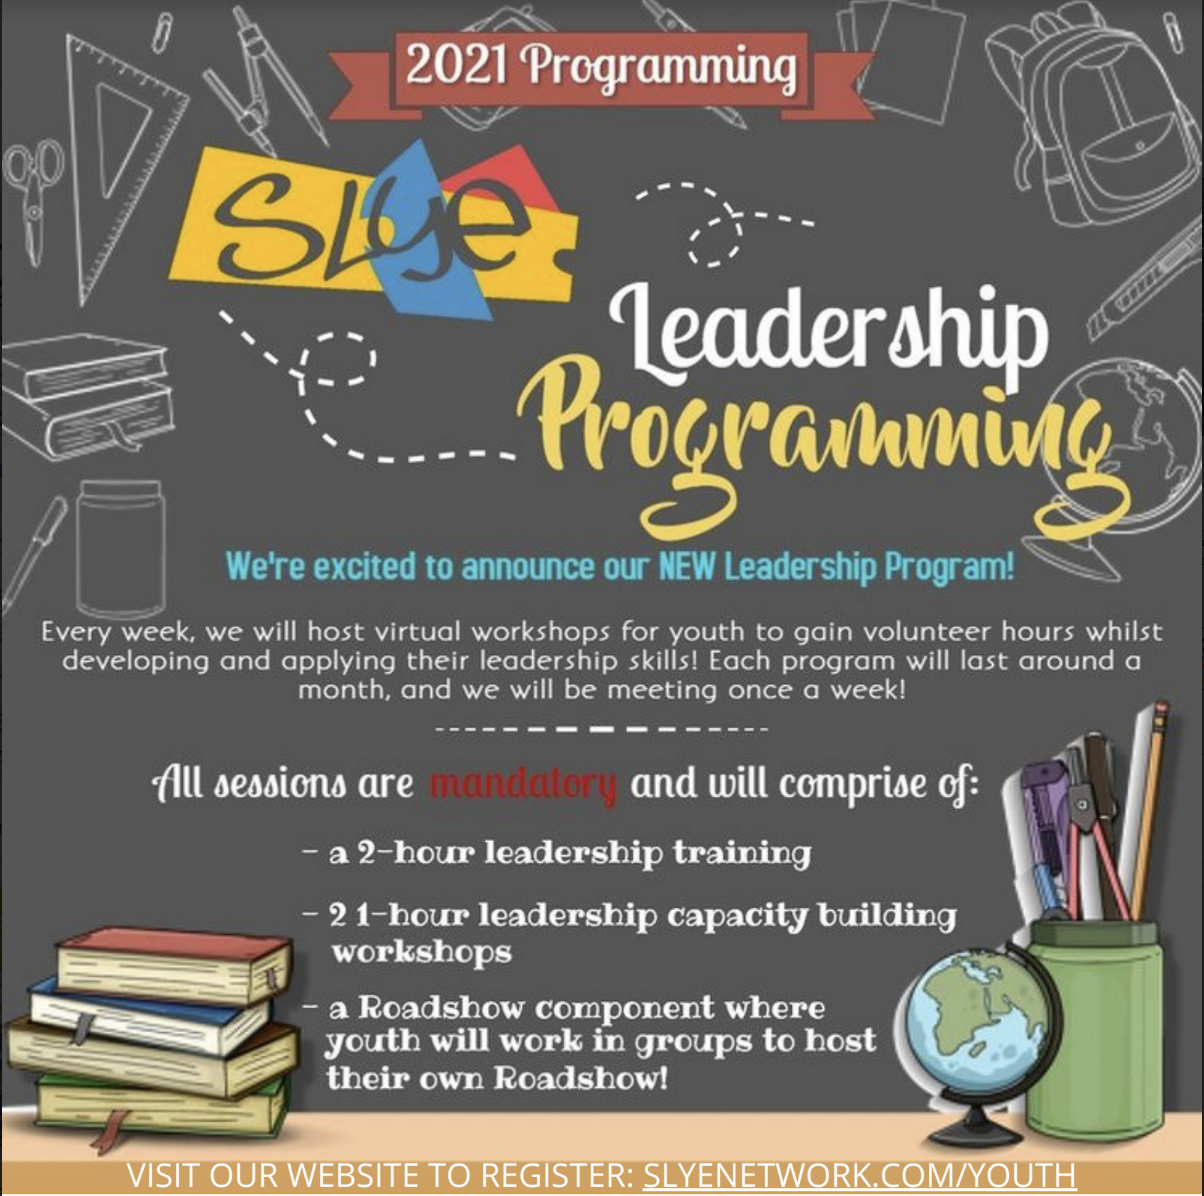 A Leadership Program Flyer With Event Details